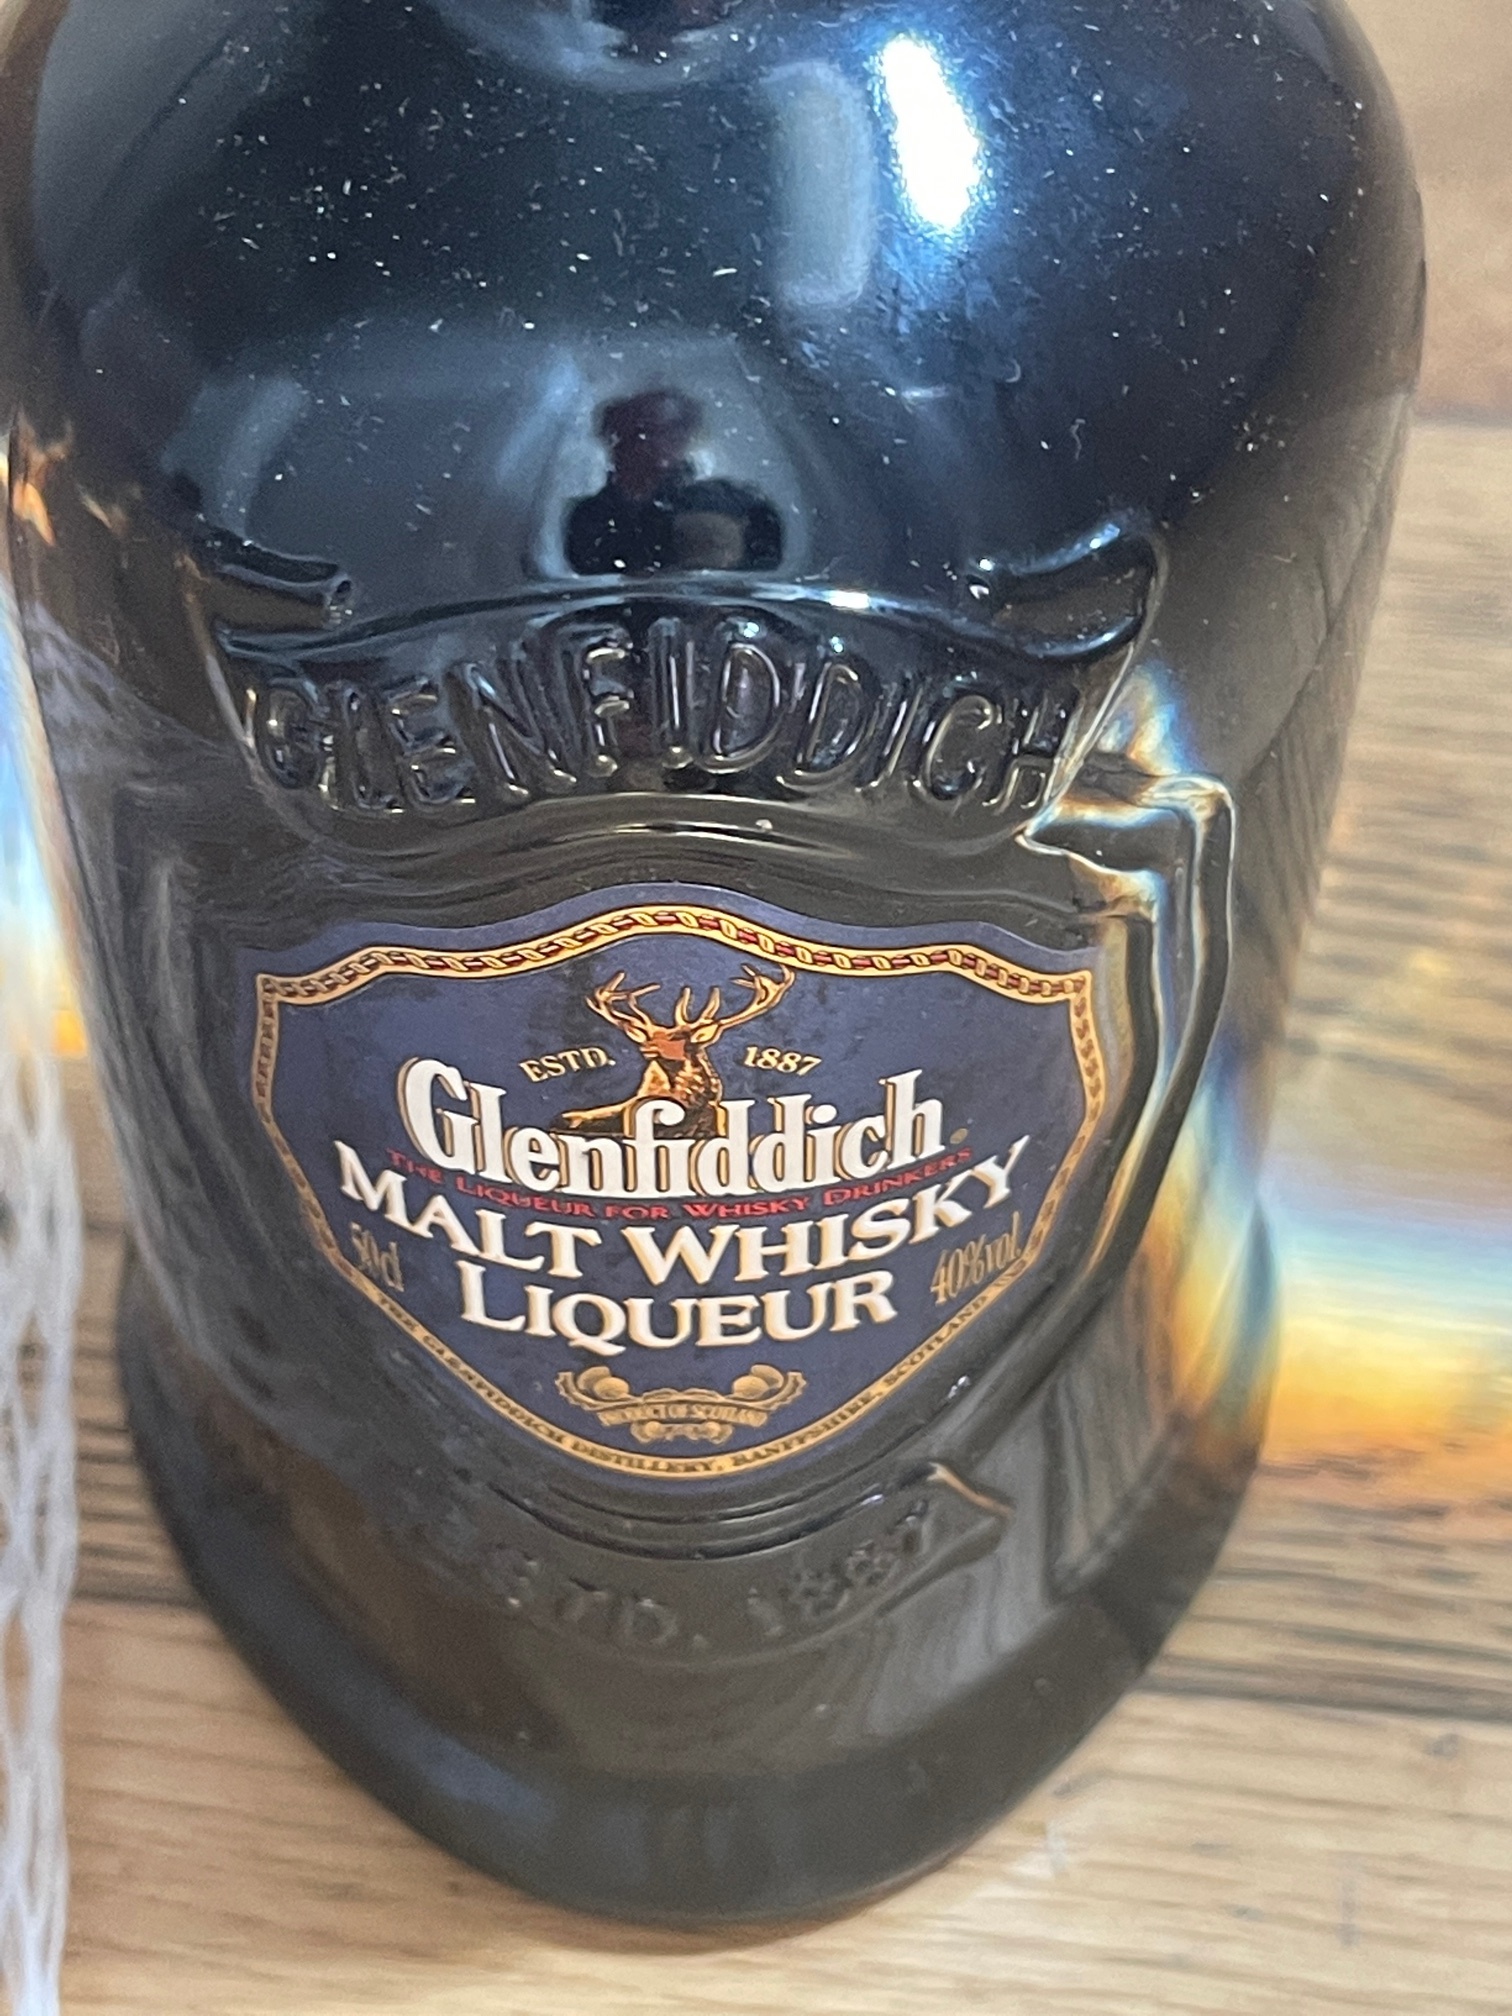 Bottle of Glenfiddich Malt Whisky Liquer - Bottle 4 of 5. - Image 2 of 5